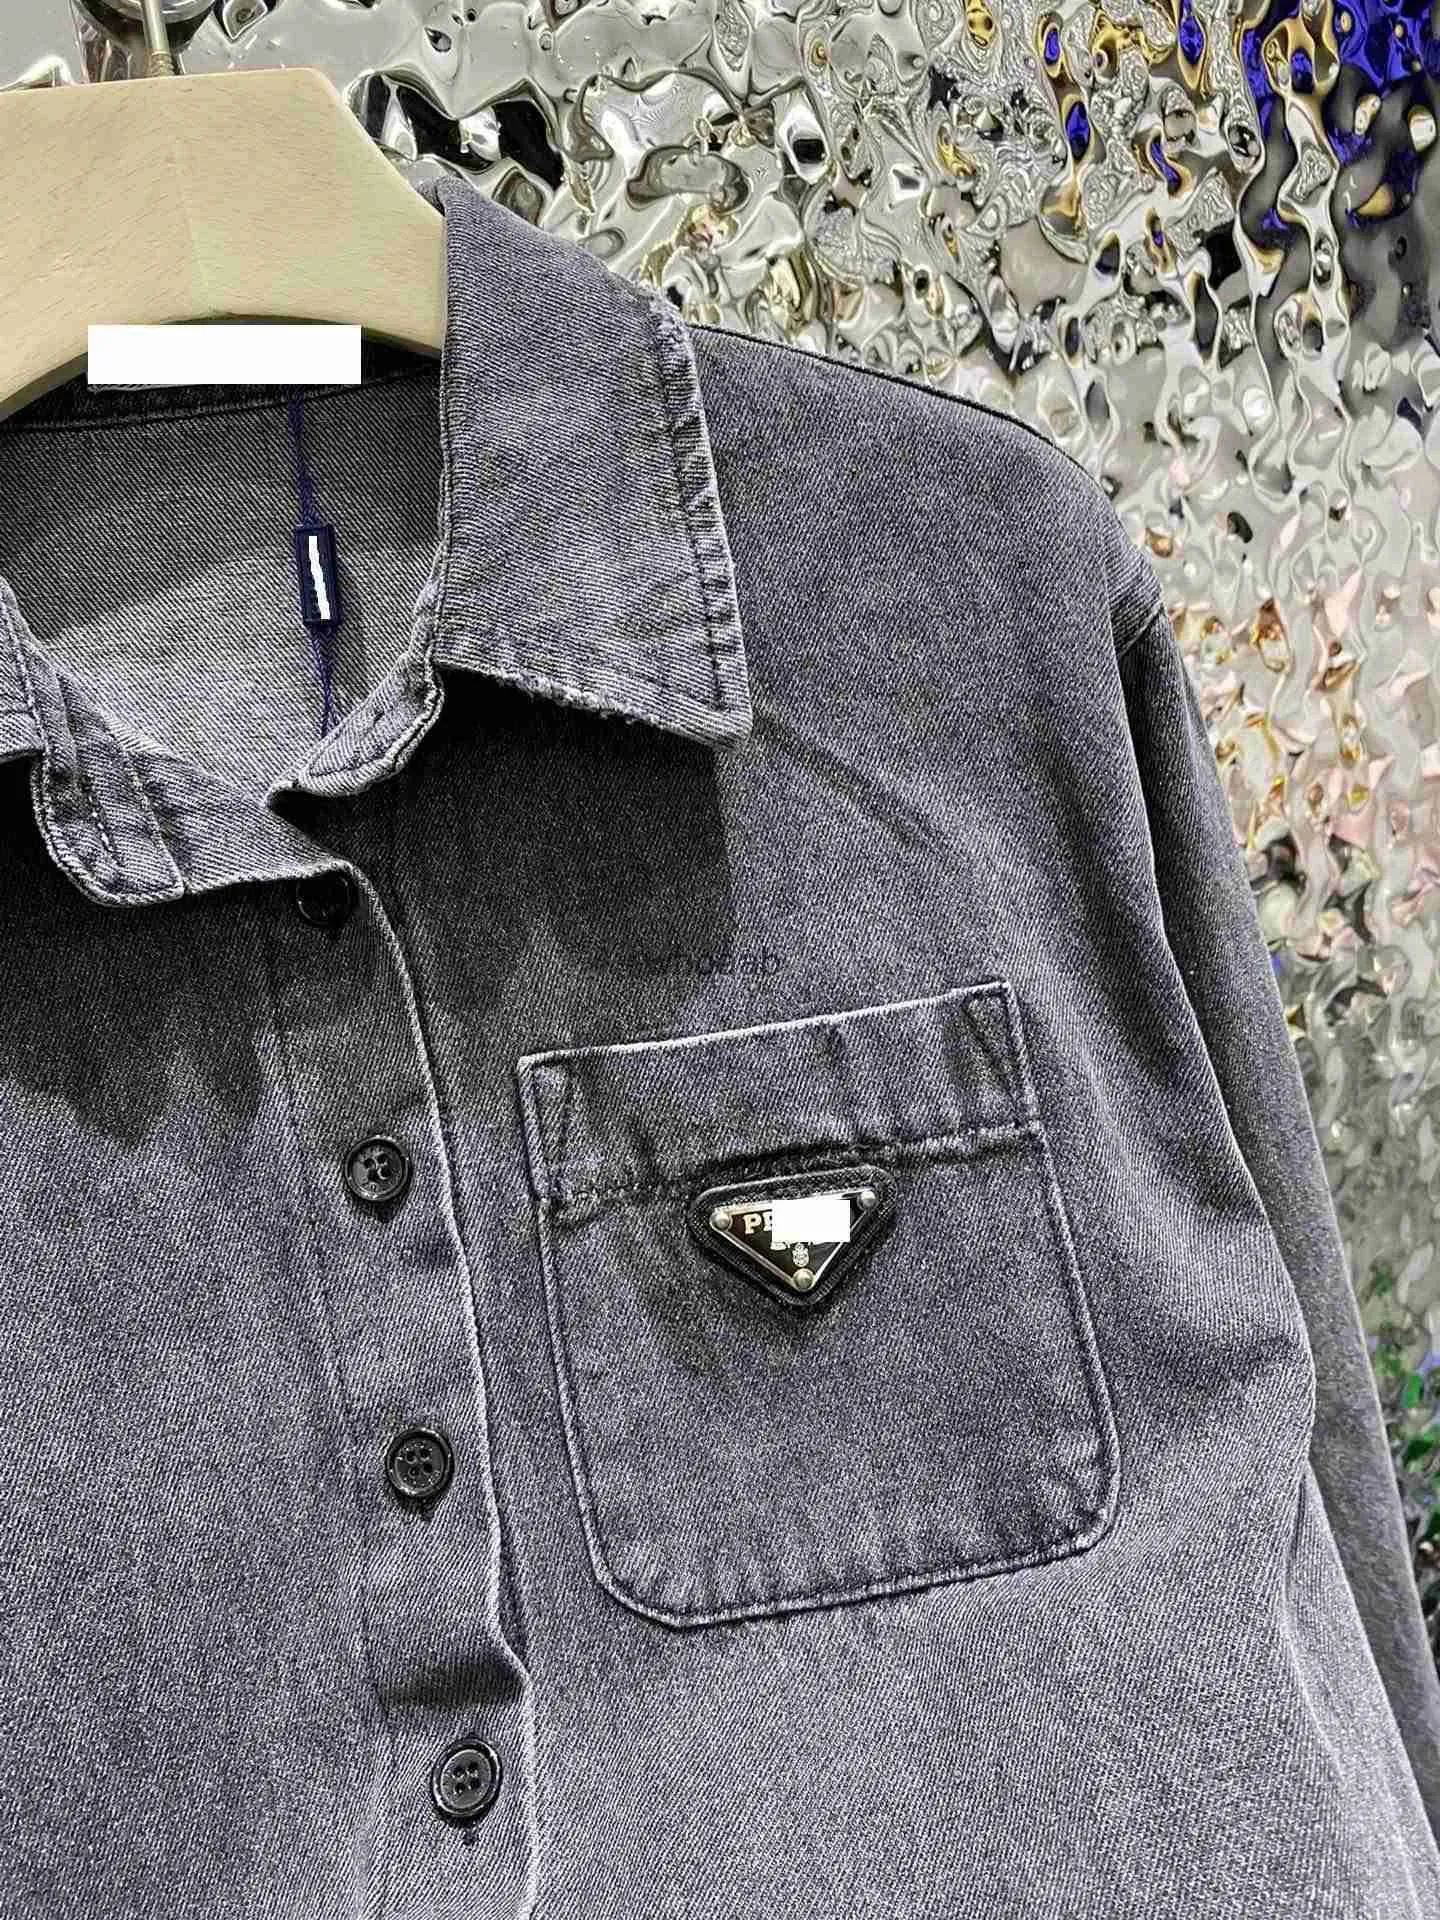 Women's Jackets Jackets denim shirt designer sweaters 240301